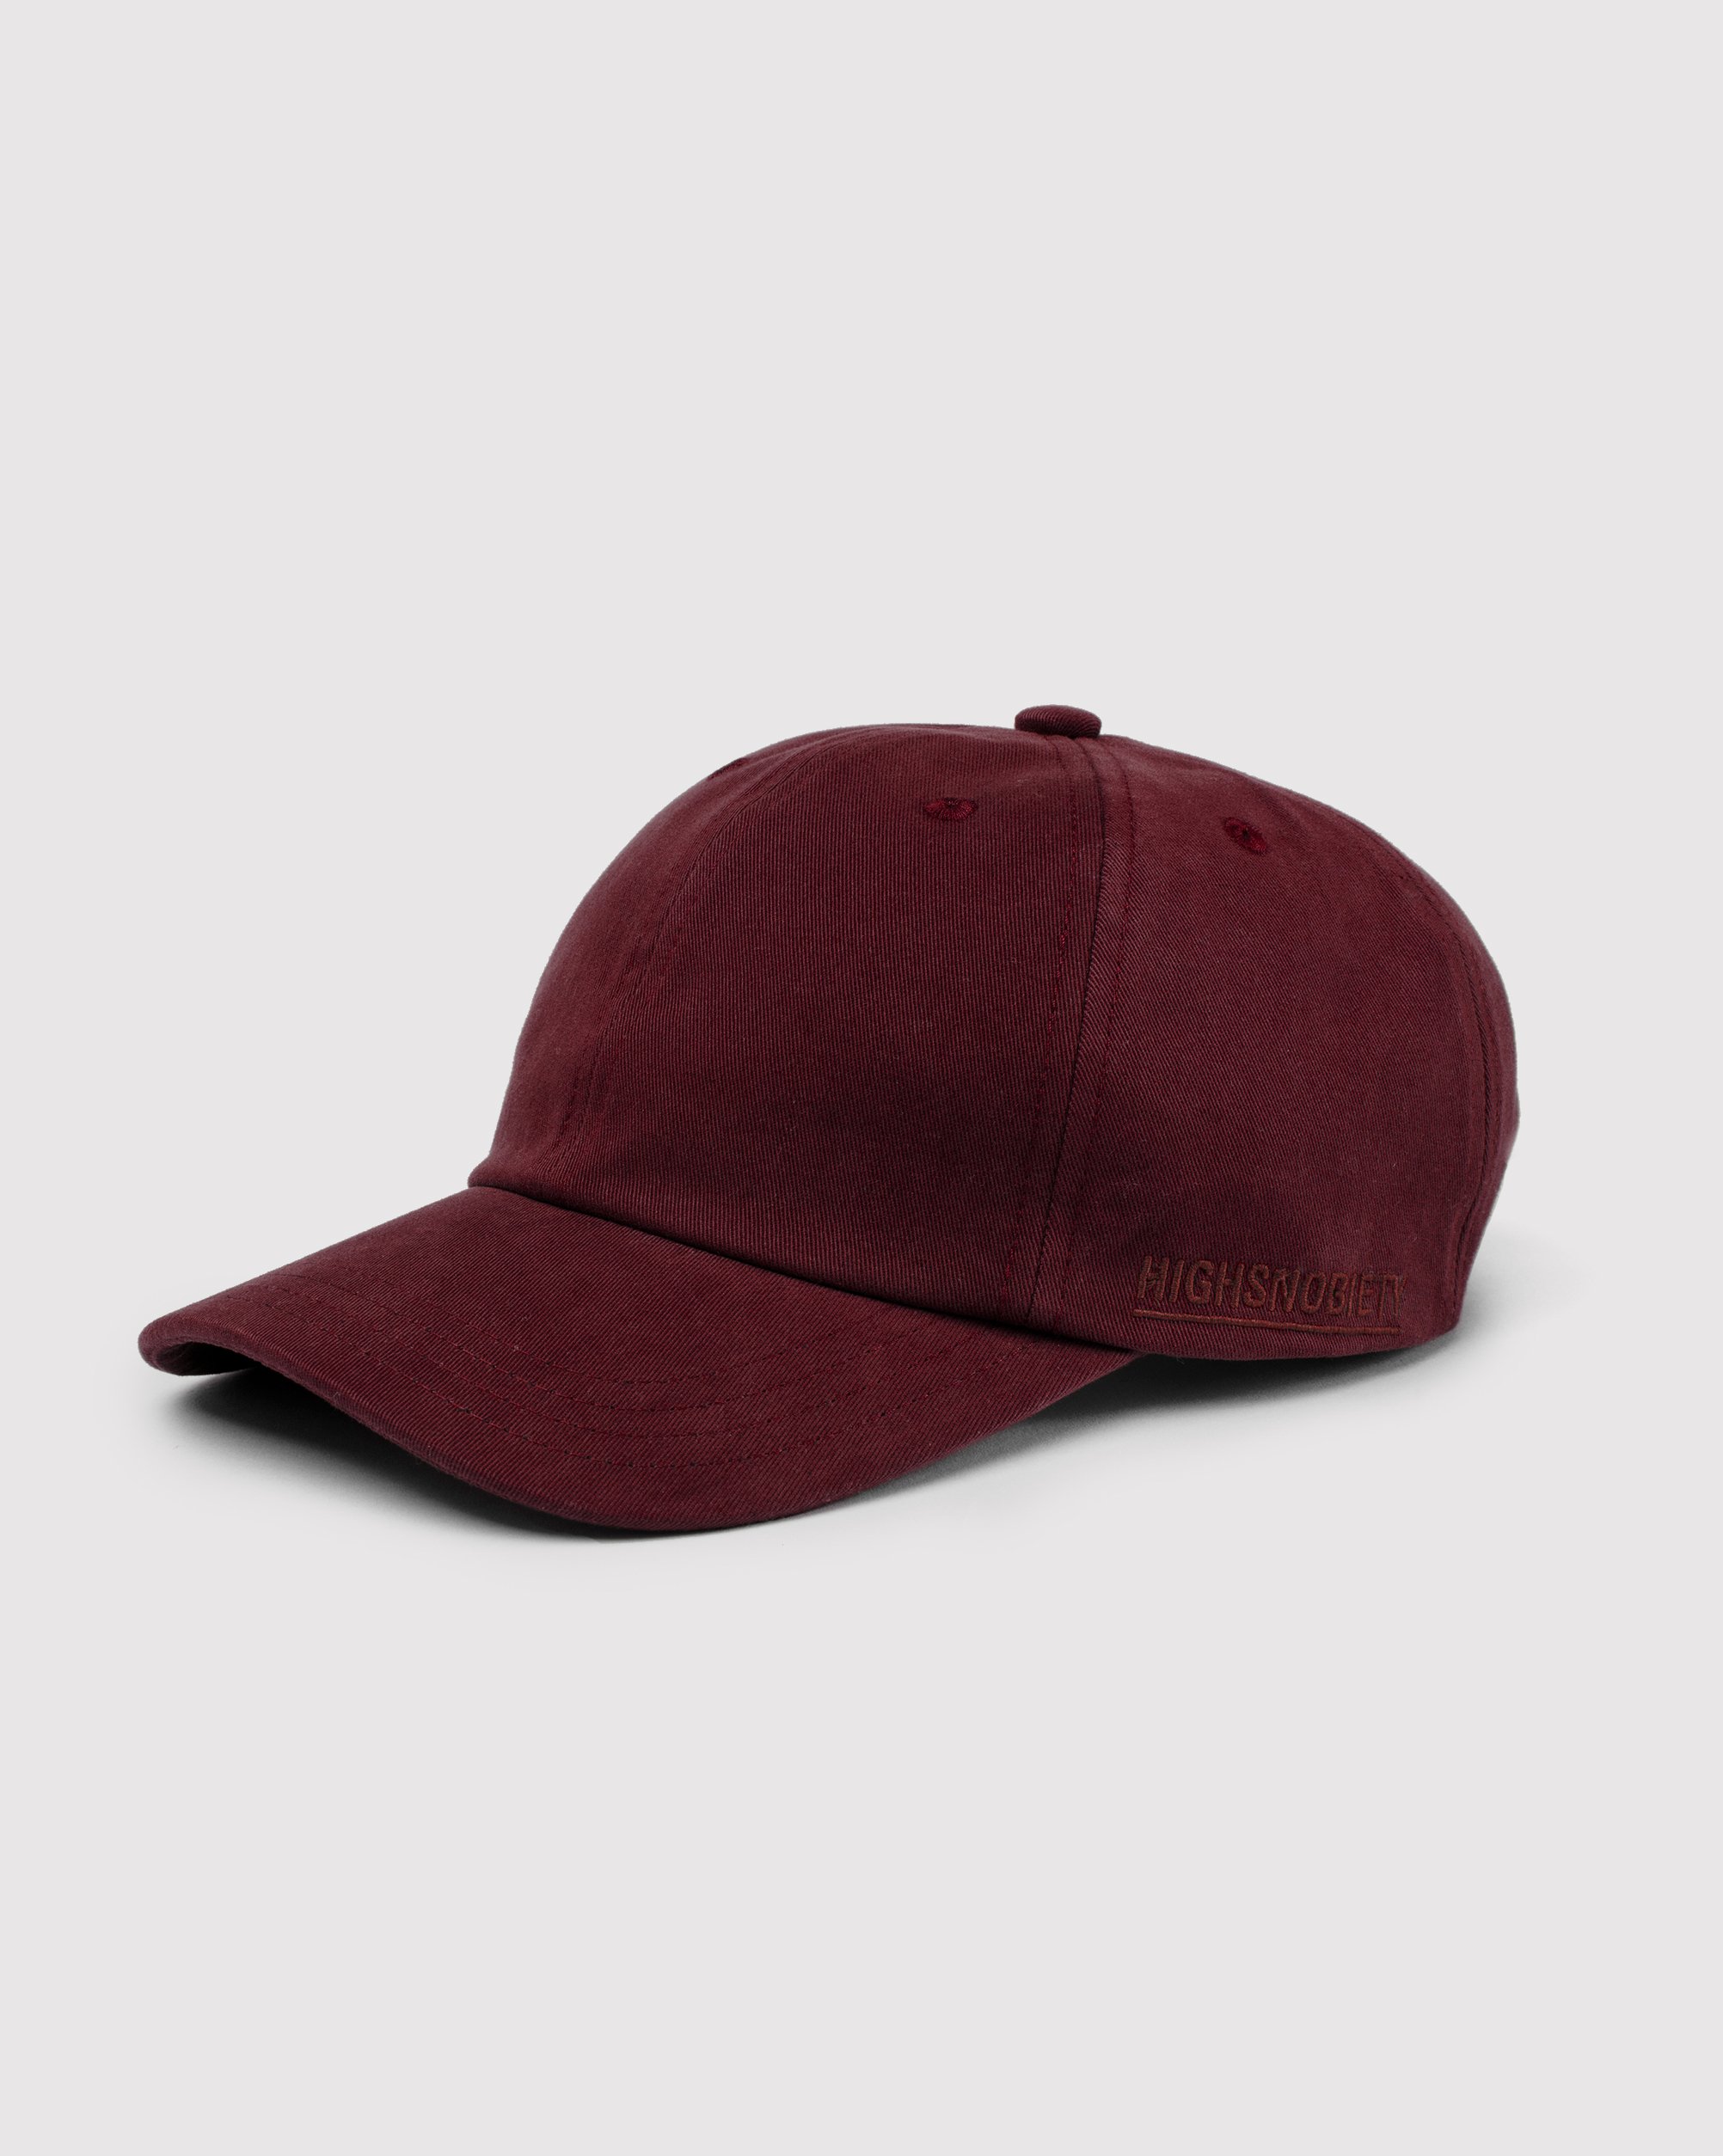 burgundy hat